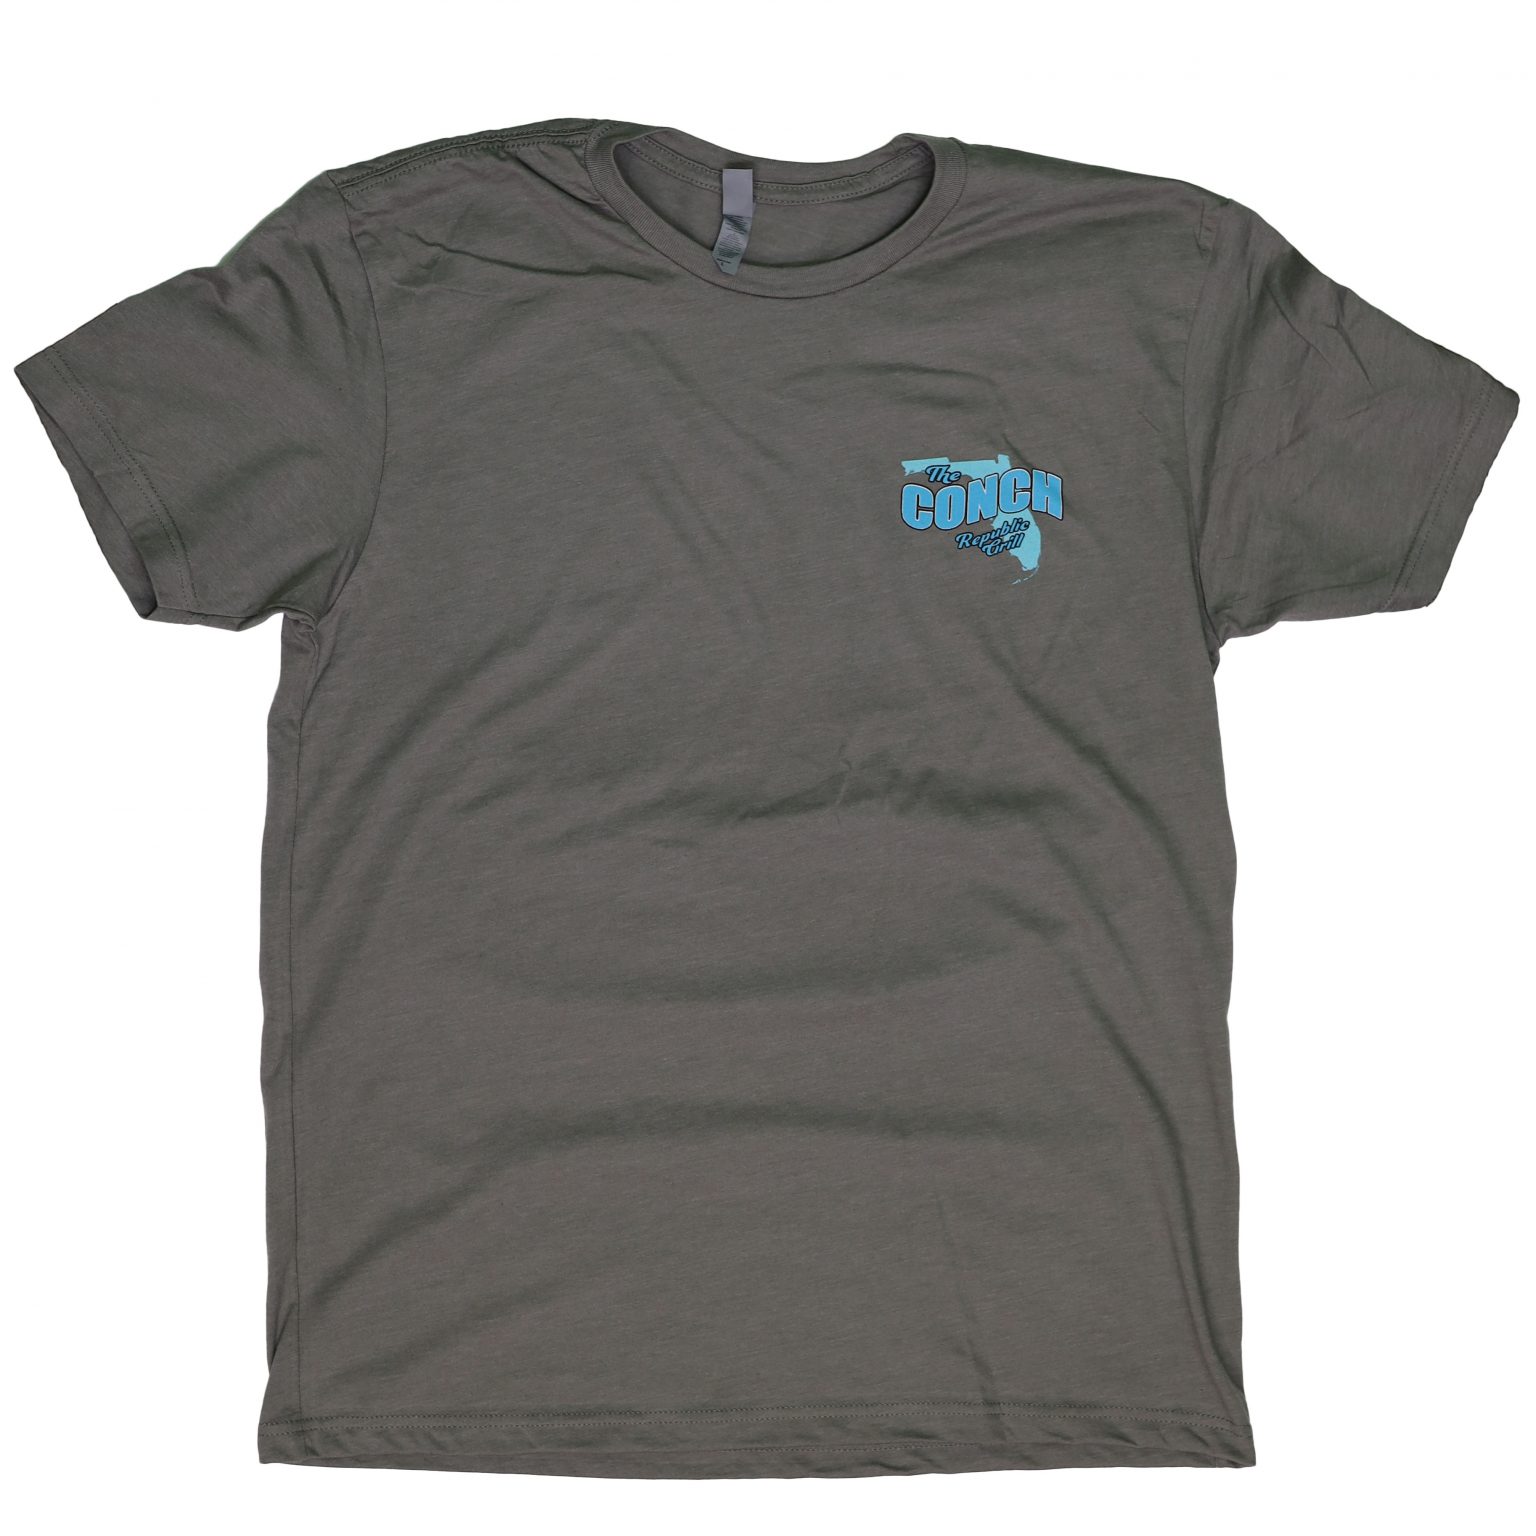 Conch Florida T-Shirt – The Conch Republic Grill